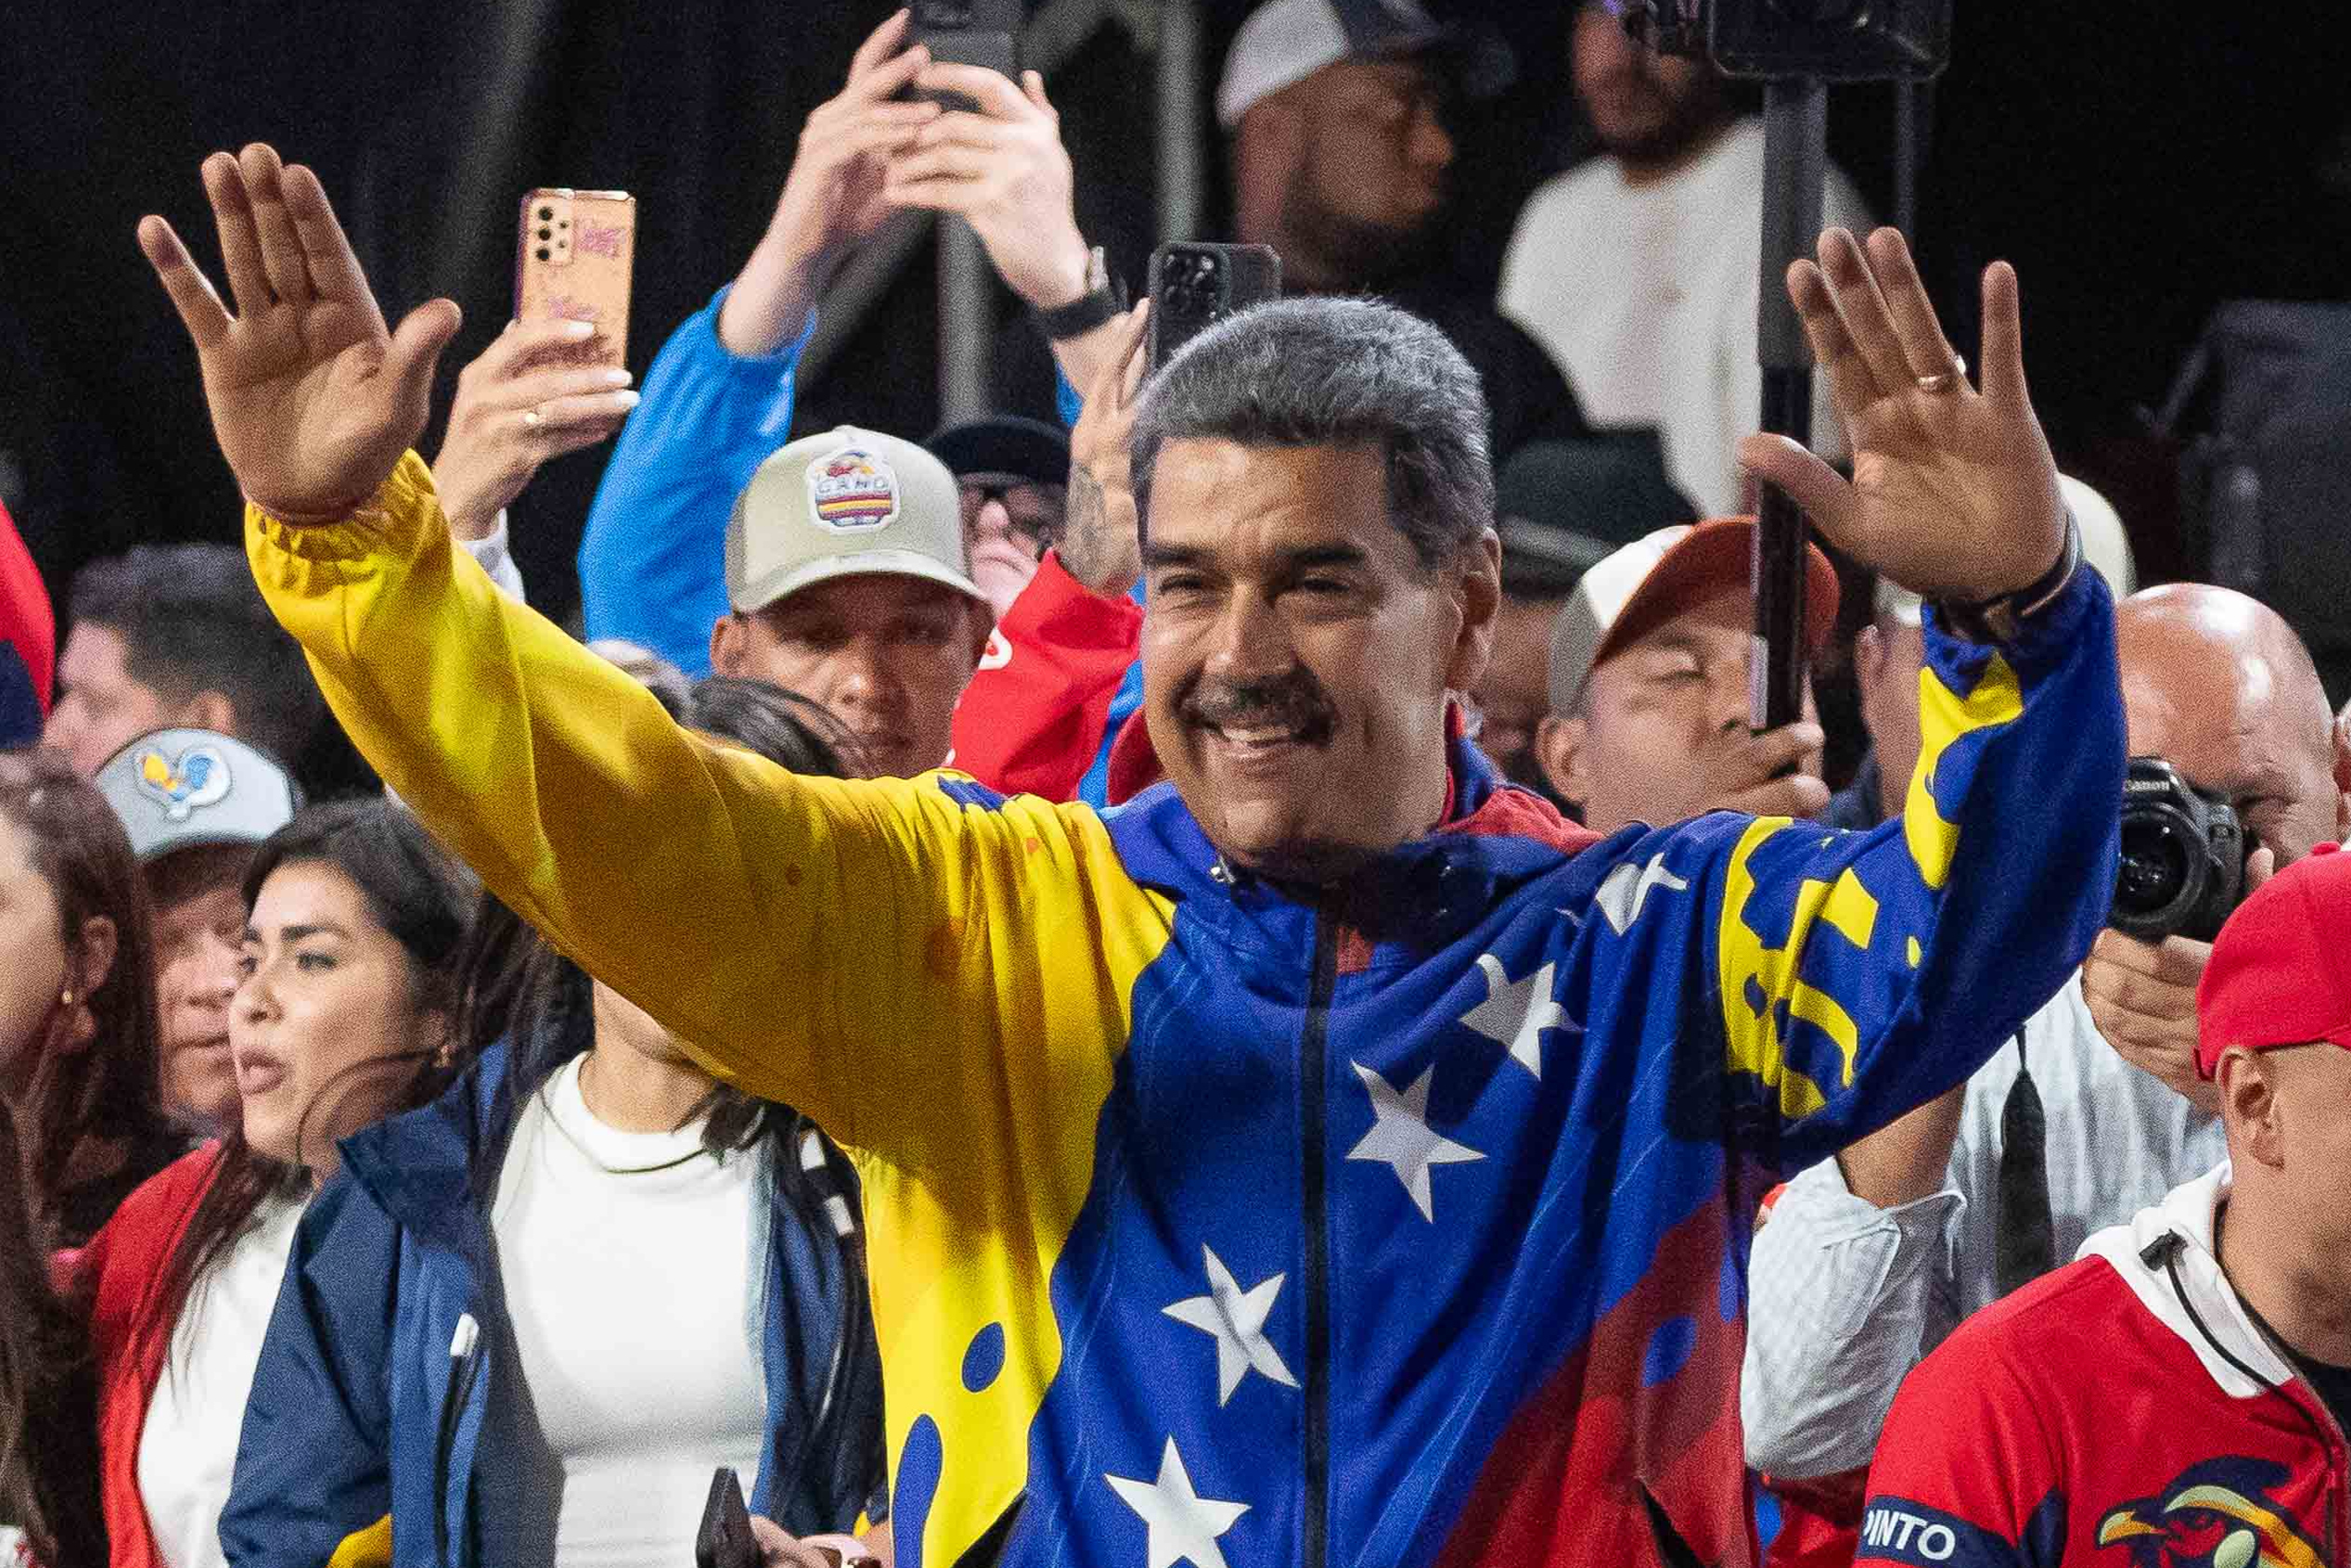 Los países que “felicitan” a Maduro pese a amplio rechazo mundial de fraude electoral